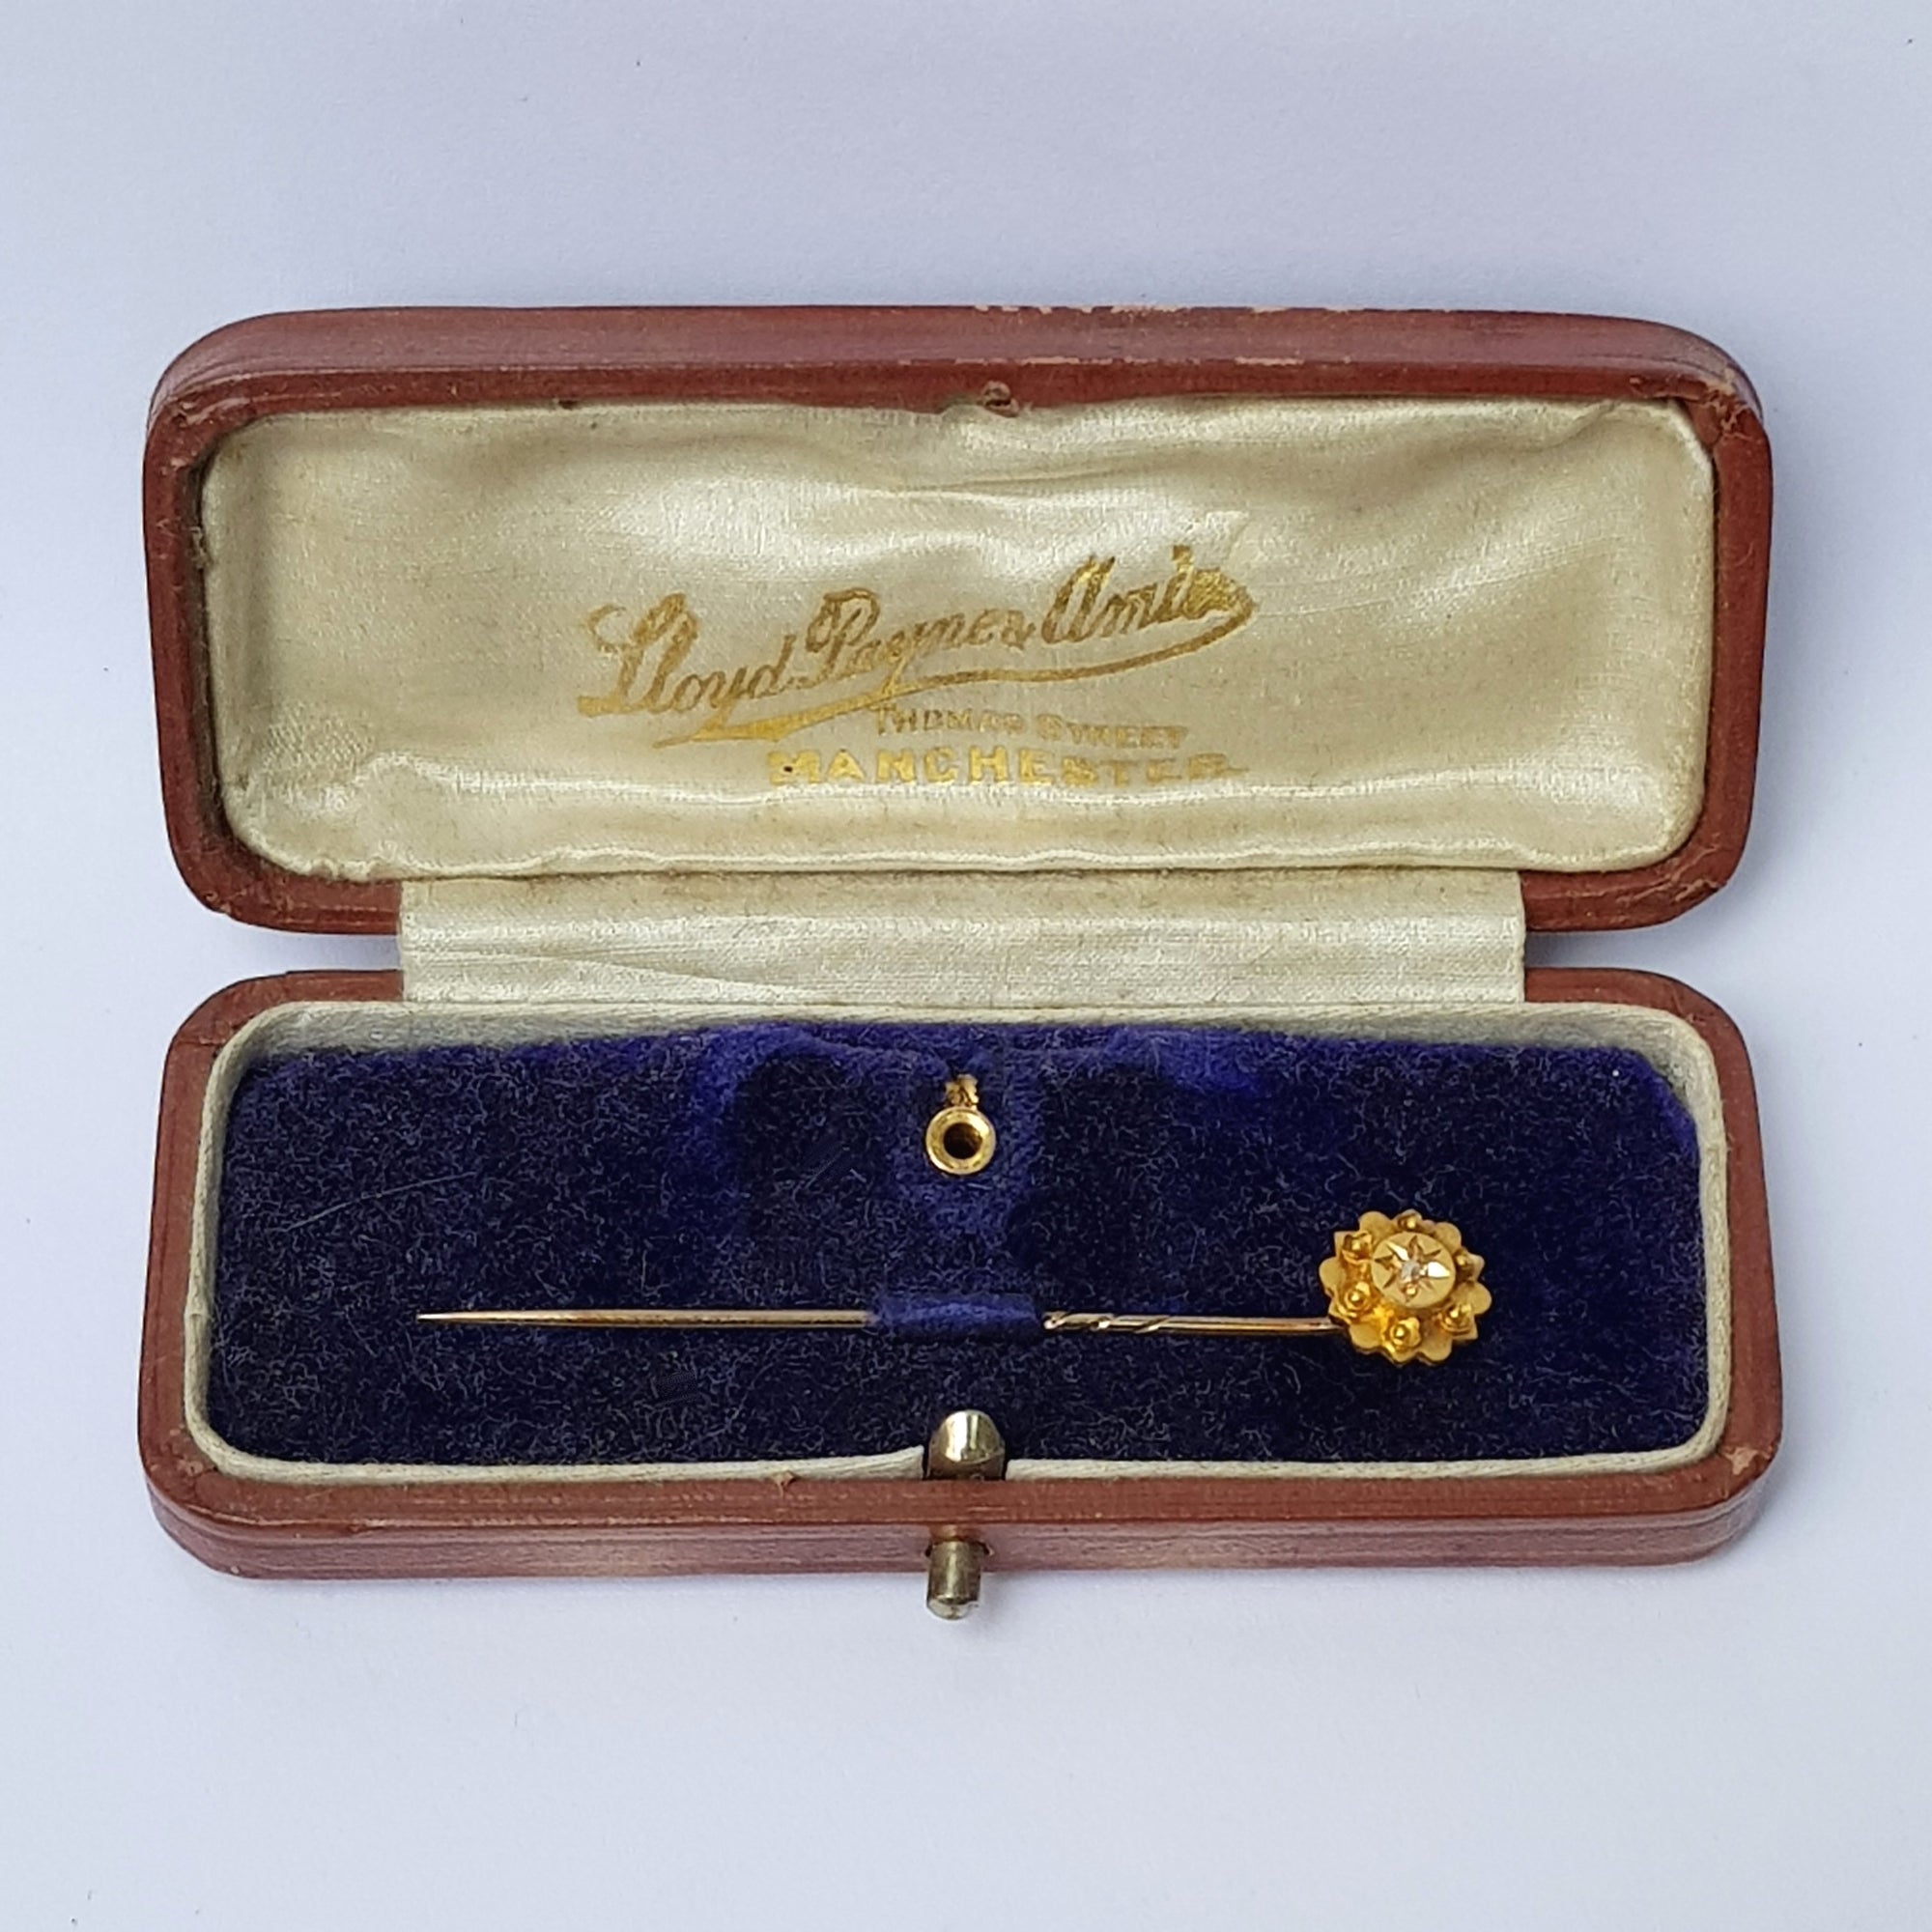 15k 15ct Gold Old Cut Diamond Set Gypsy Flower Stick Pin Tie Cravat Pin In Jewellers Box Antique Victorian Circa 1870